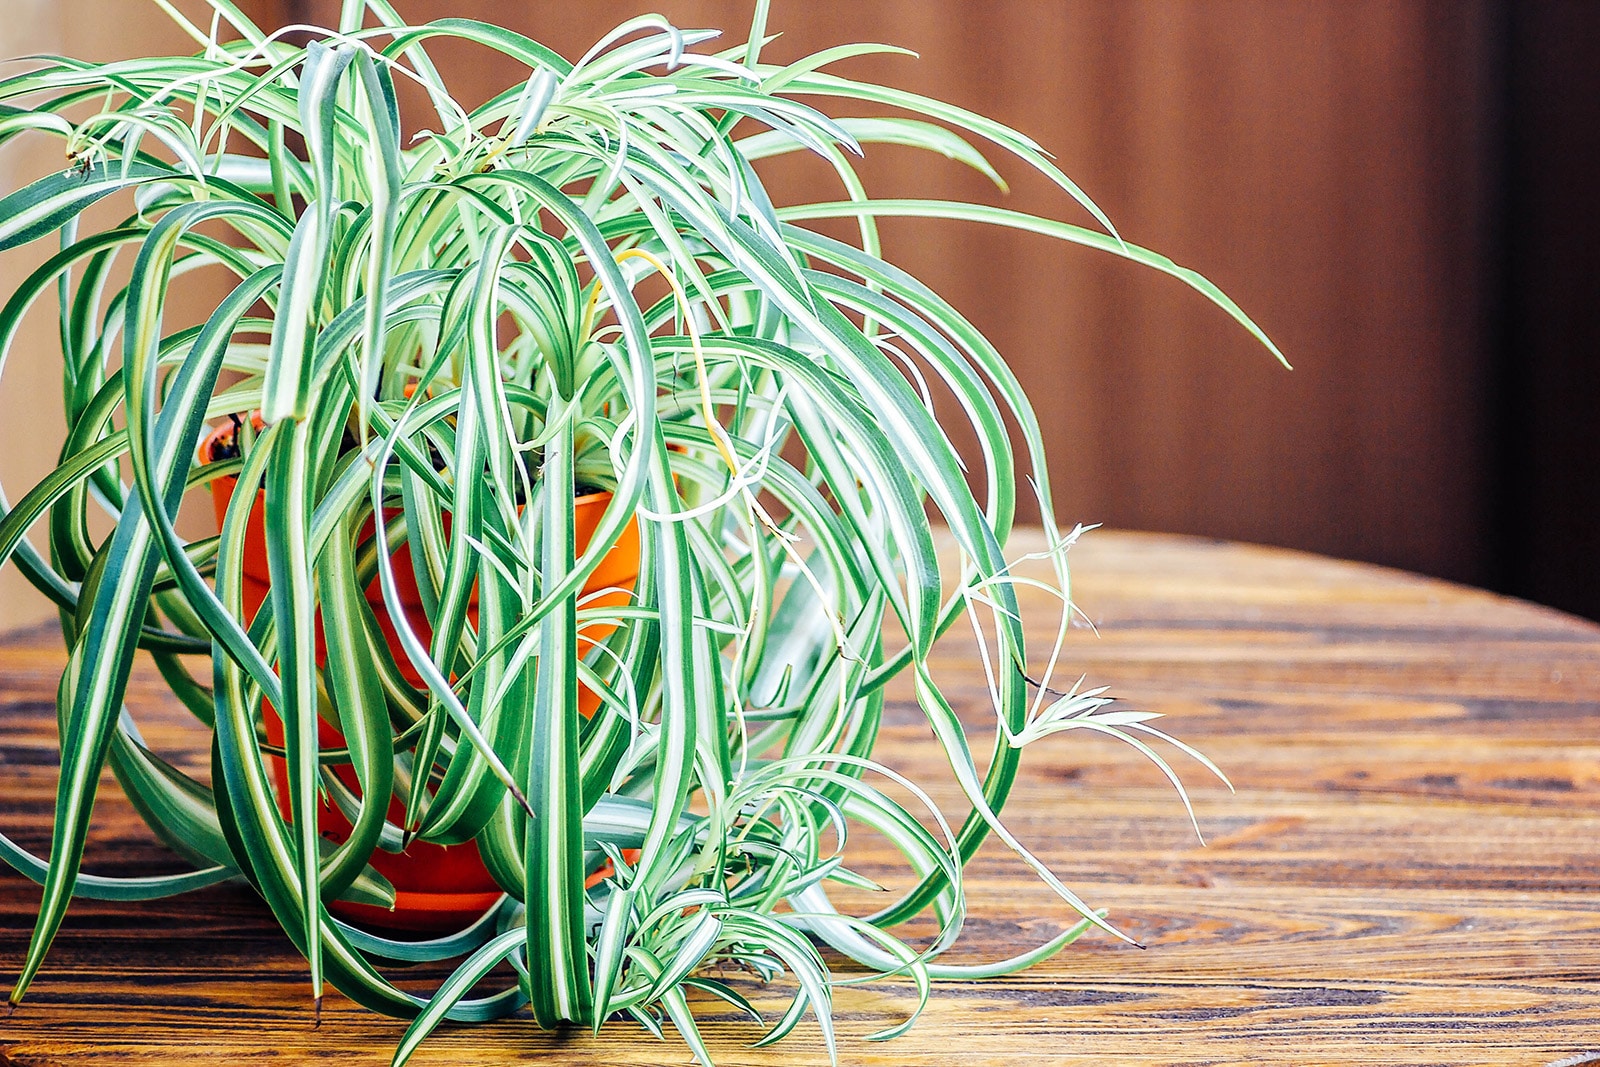 A bushy spider plant (Chlorophytum comosum) in an orange pot on a rustic wooden table